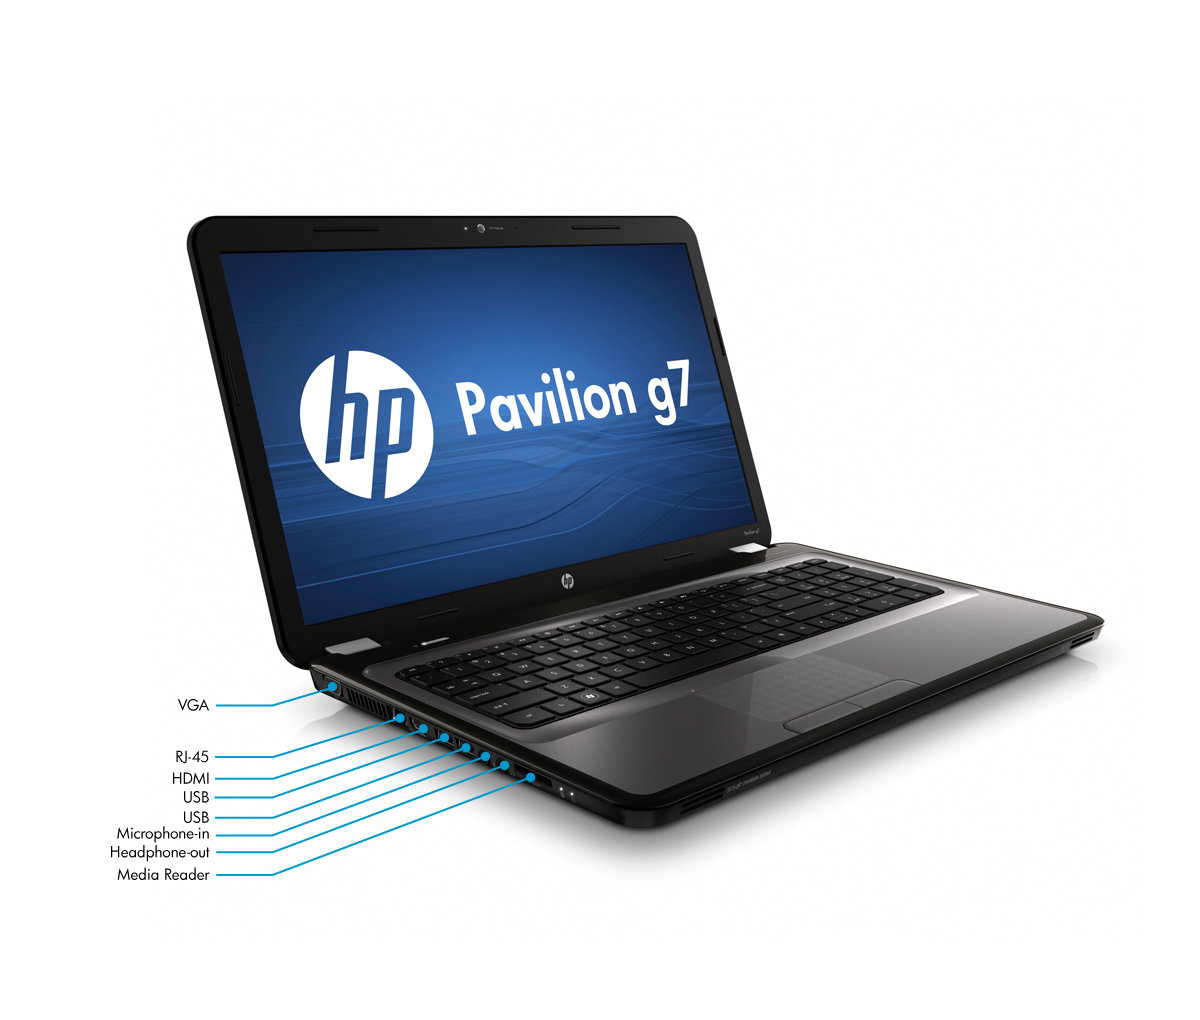 HP Pavilion g7-1272nr Notebook PC Left View